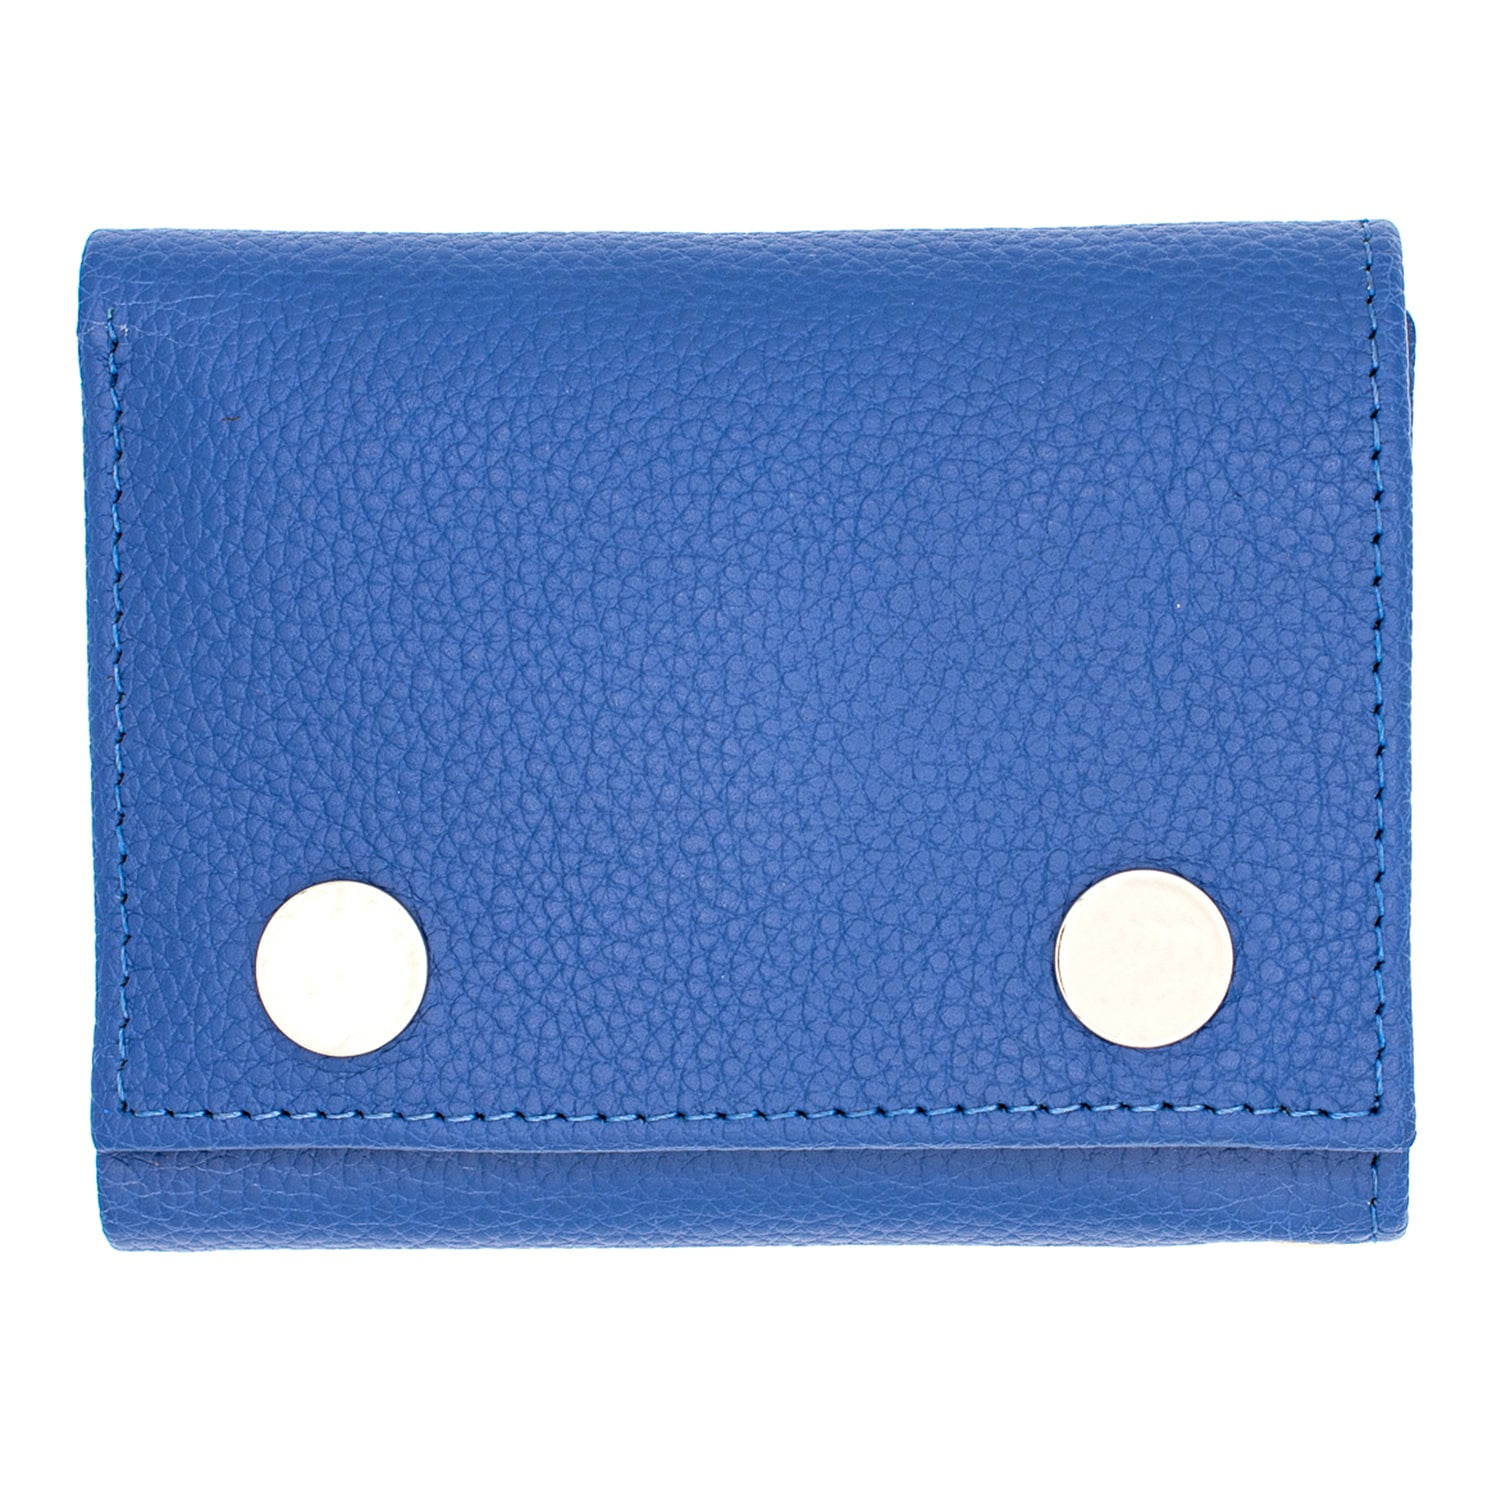 New Tri-Fold Therapeutic Leather Wallet Kit #1044 Tan & Blue w